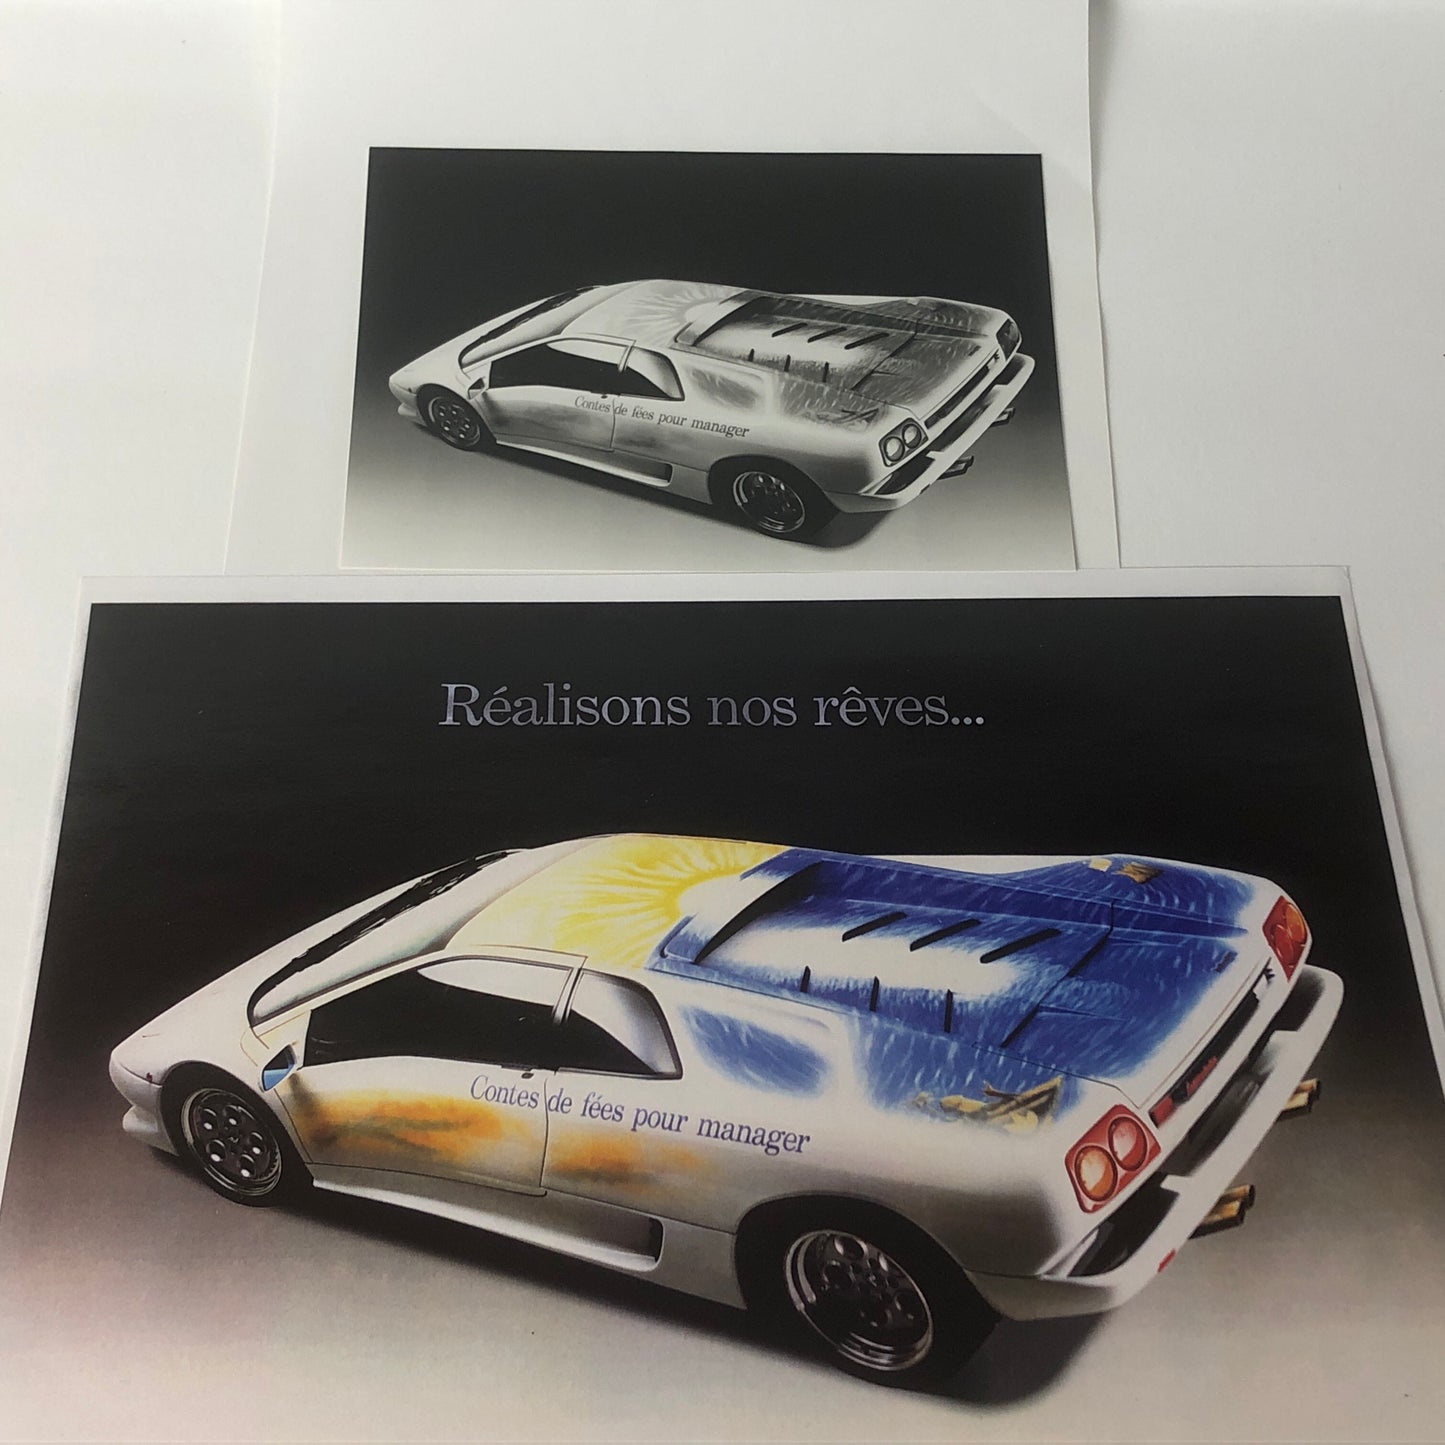 Lamborghini Sketch Presentation of the book "Contes de Fées pour Manager" by Mario Bondanini